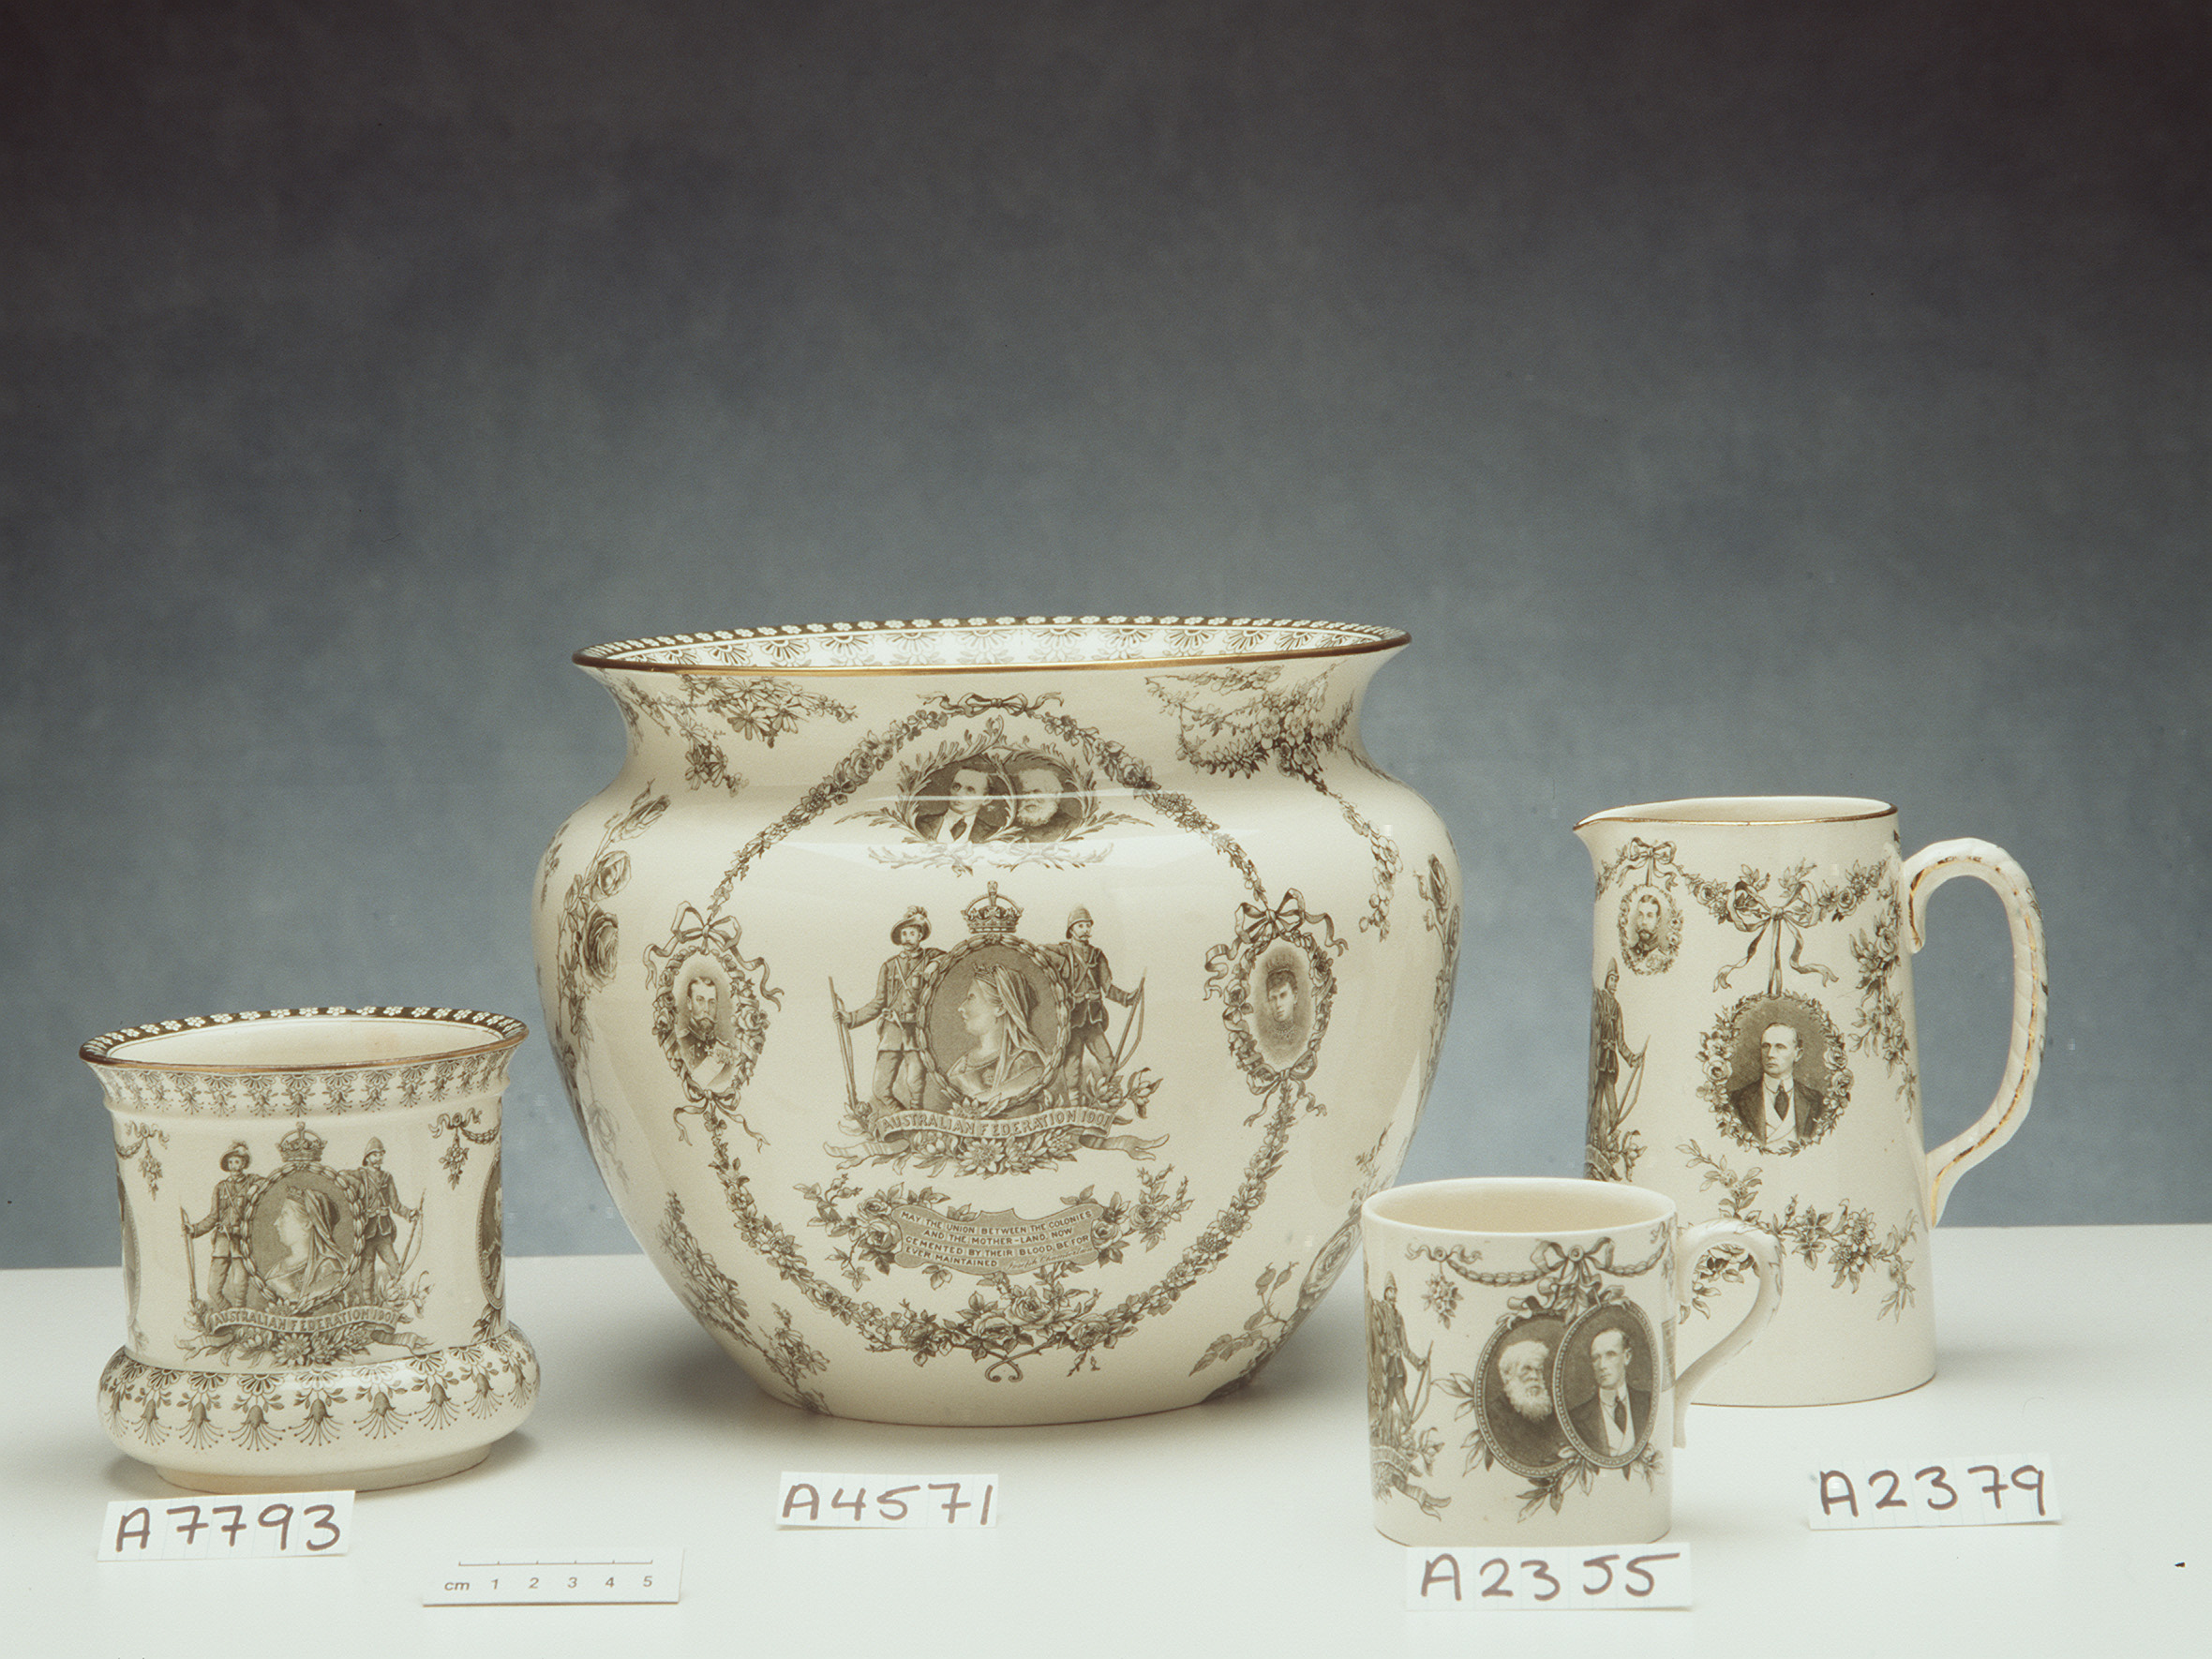 Commemorative earthenware mug made by Doulton & Co